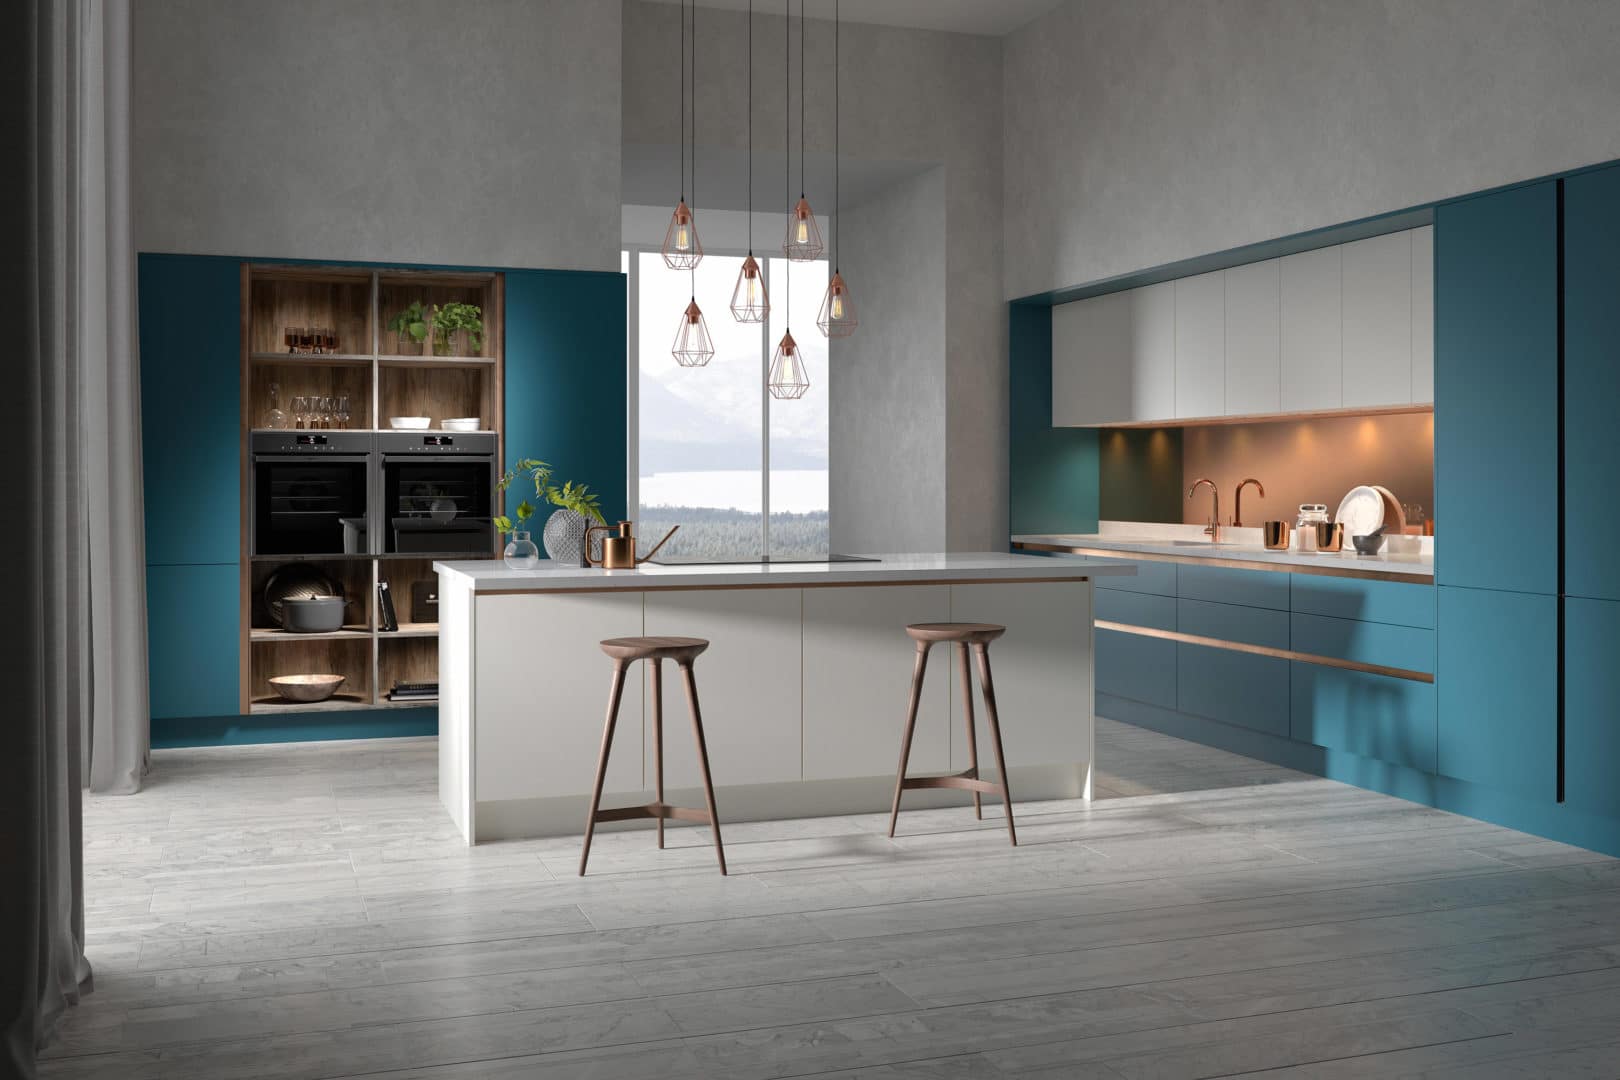 Solo Kitchen Interior CGI - Ronen Bekerman - 3D Architectural ...